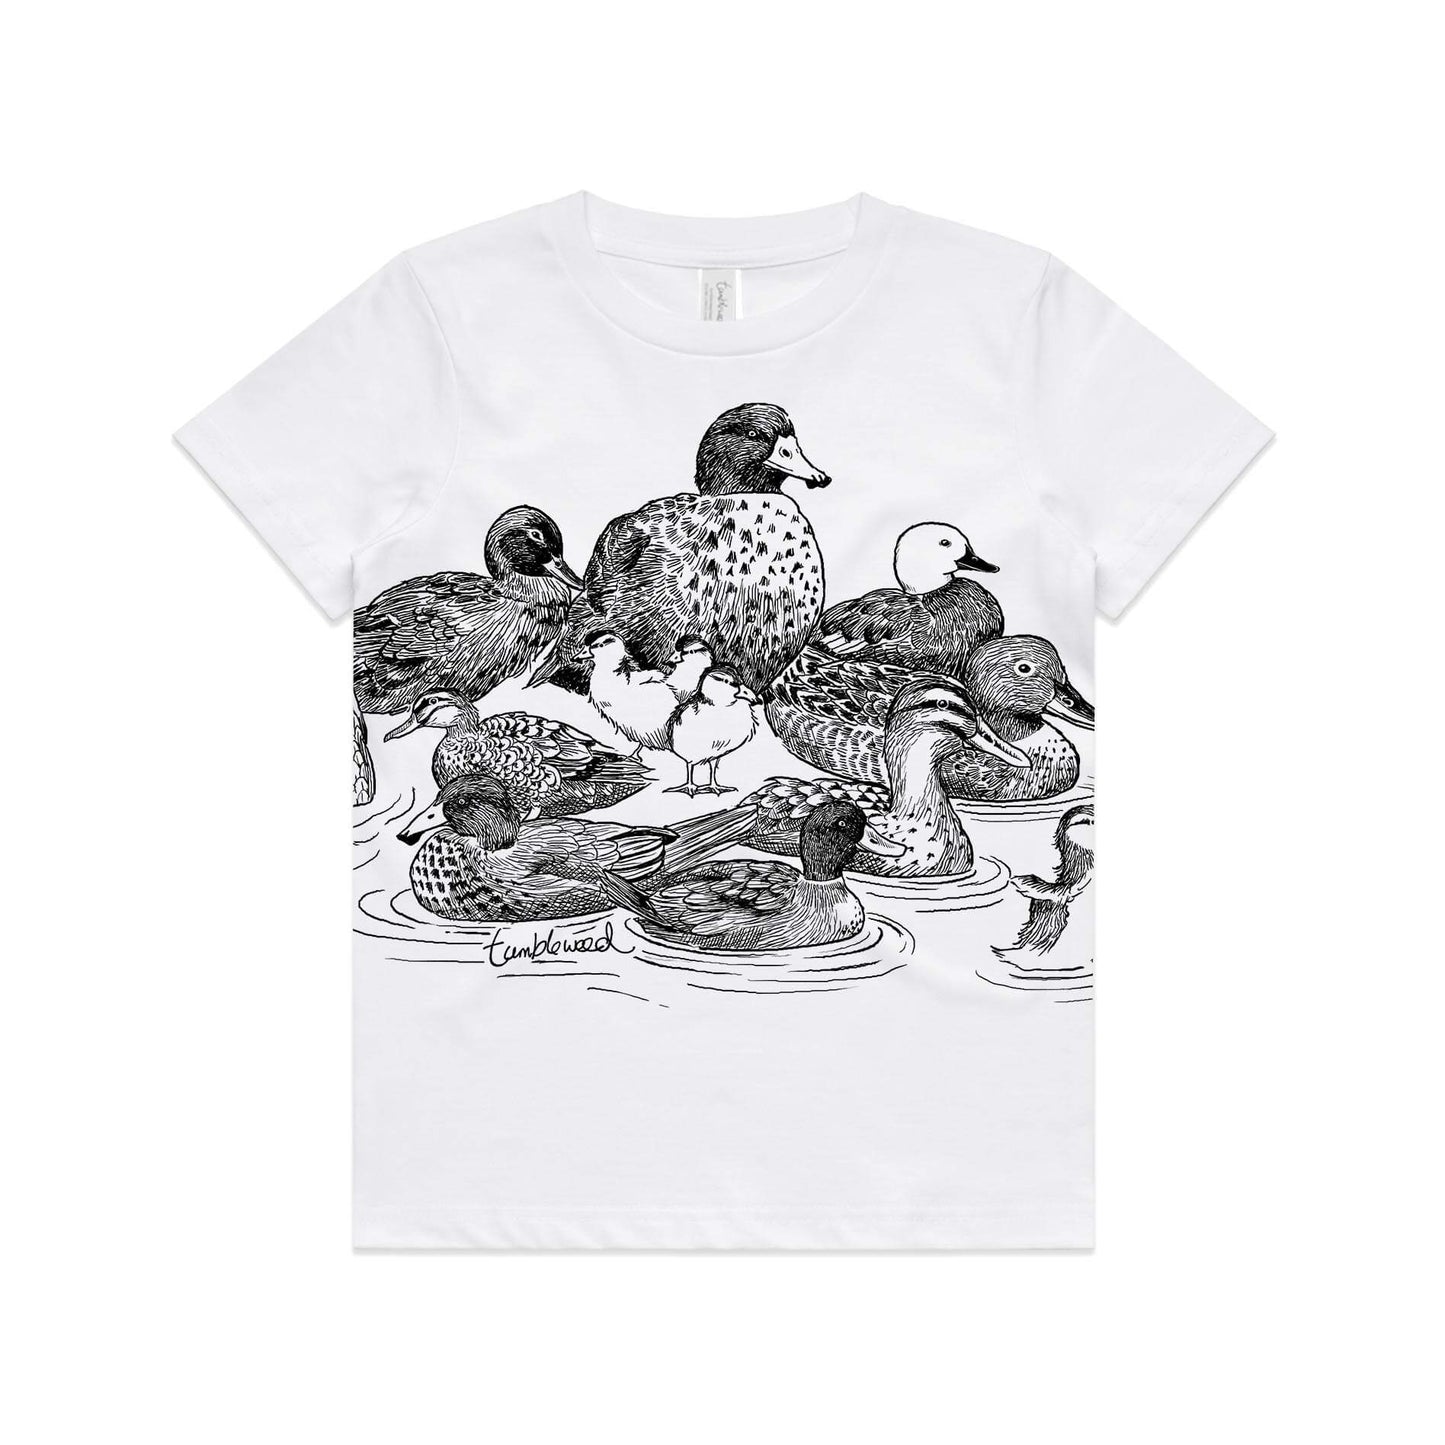 White, cotton kids' t-shirt with screen printed ducks design.